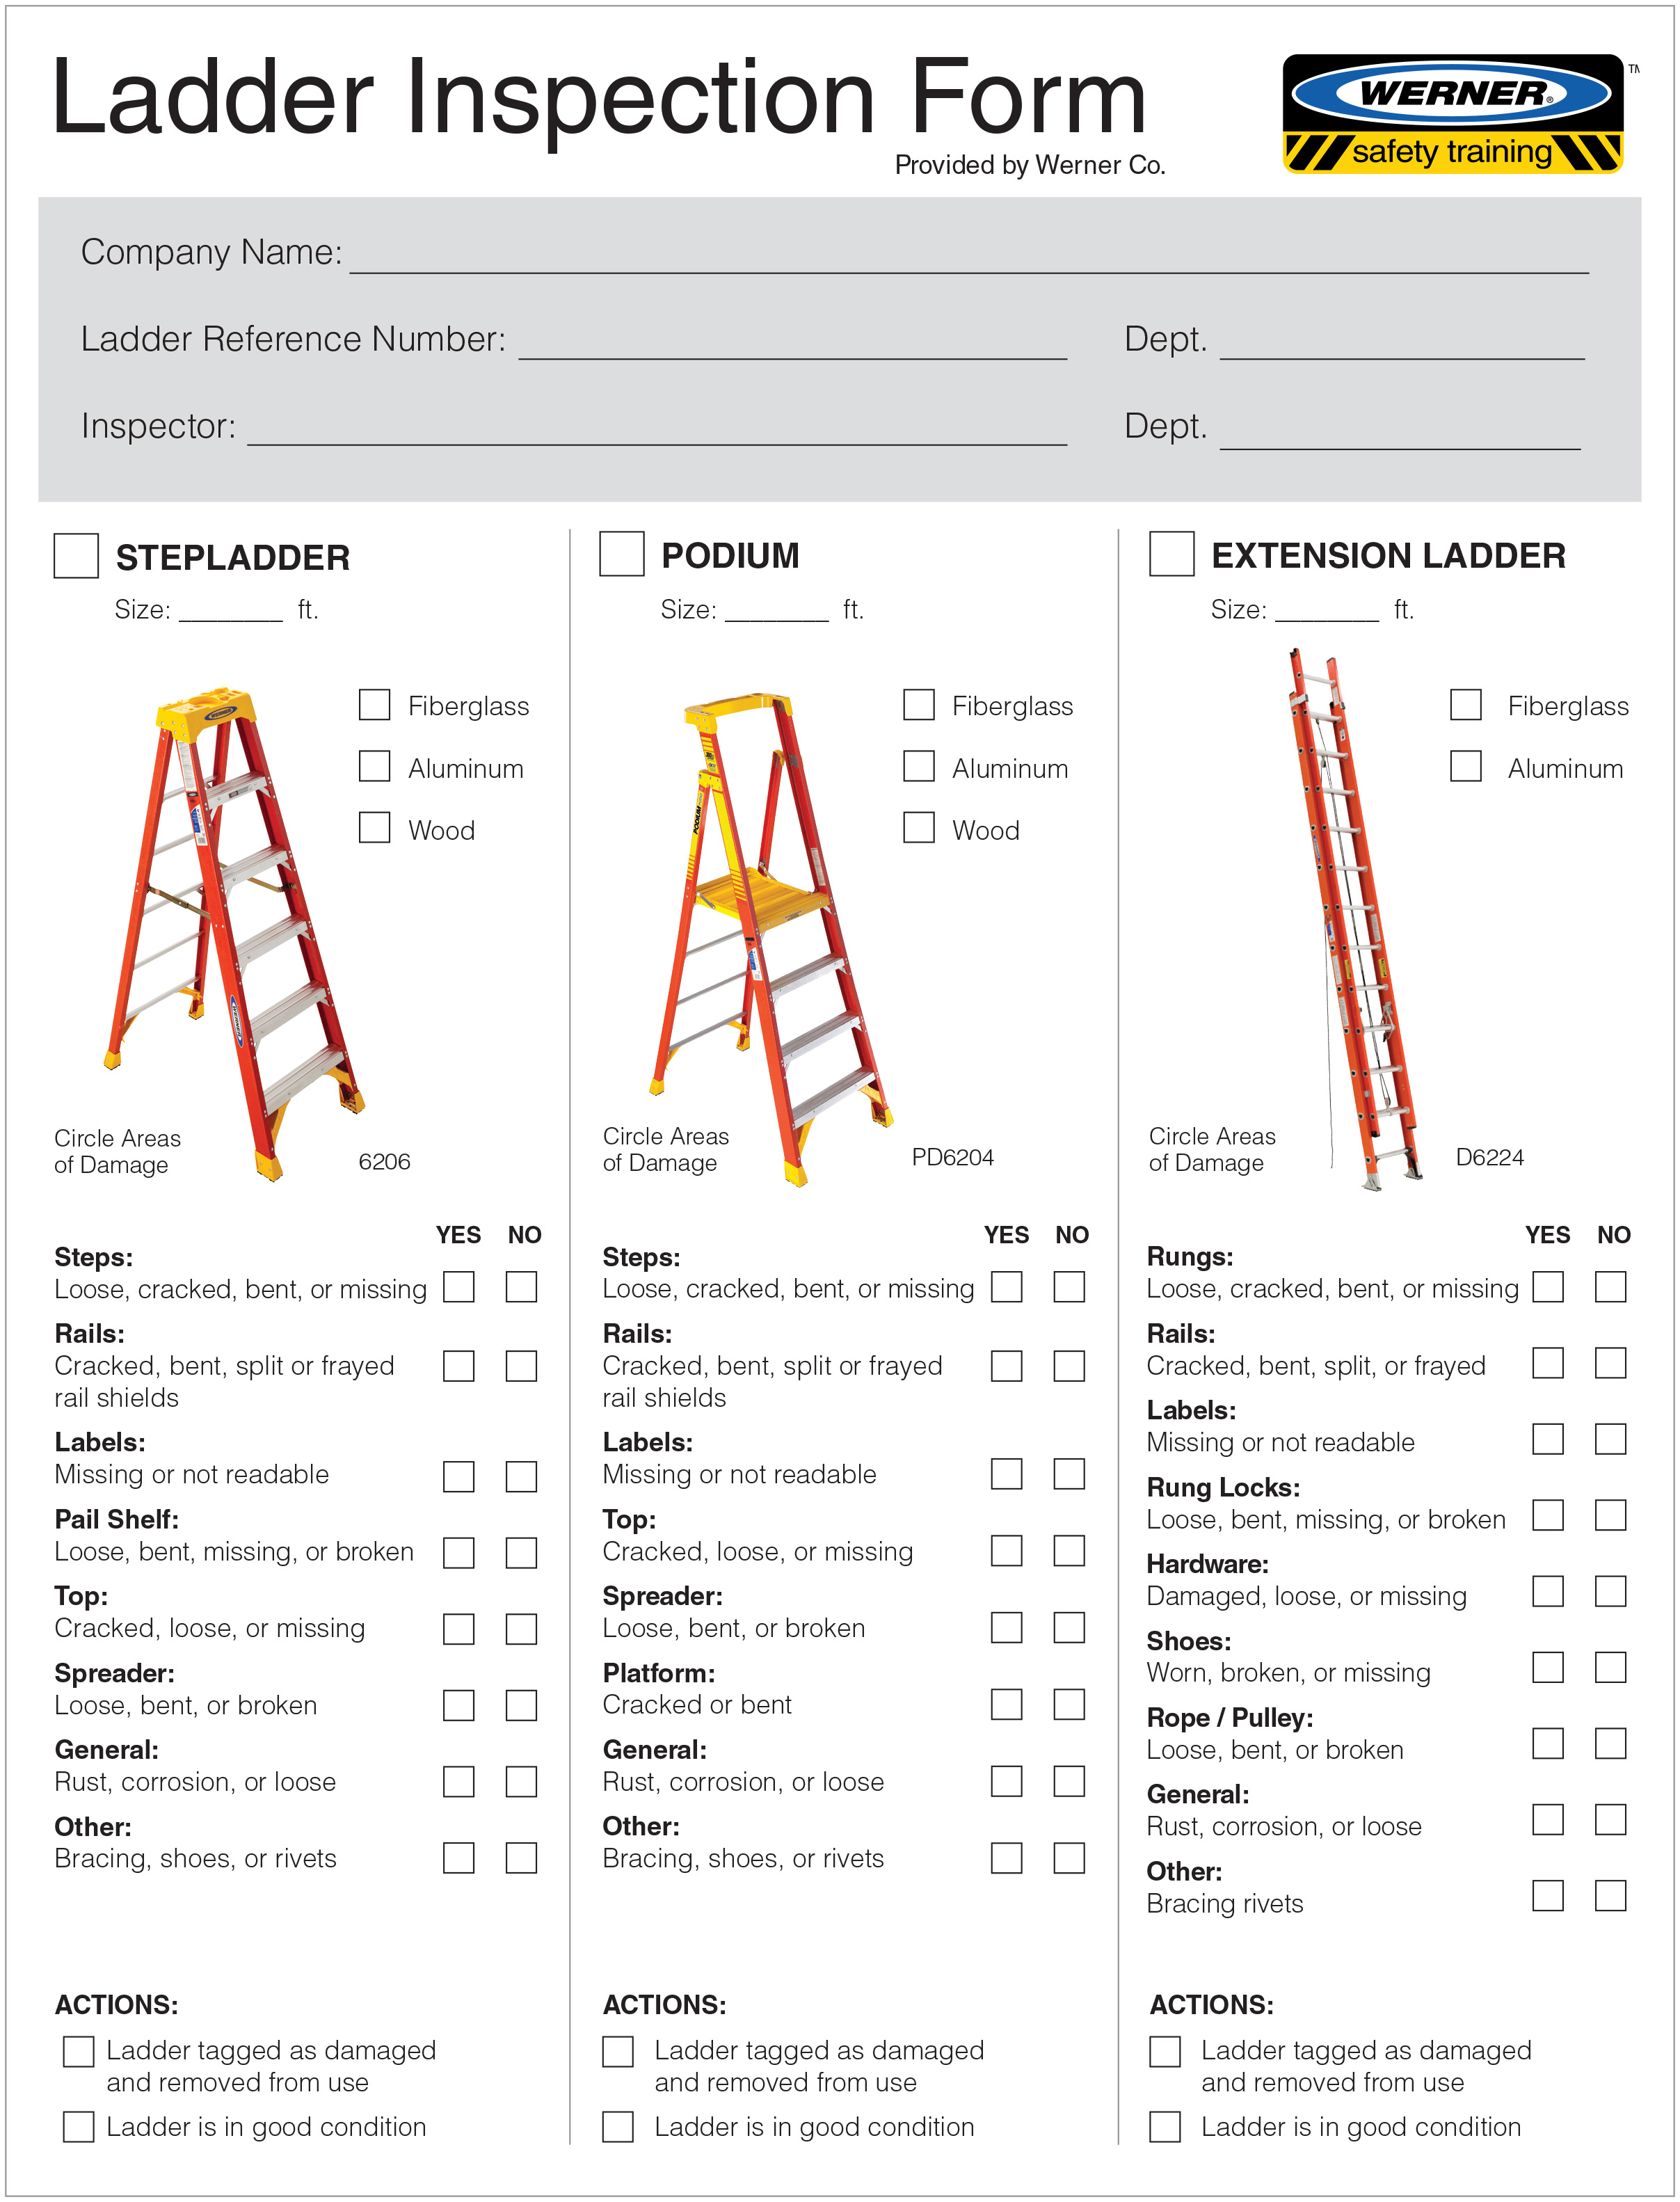 ladders-ladder-information-ladder-inspection-video-form-industrial-ladder-supply